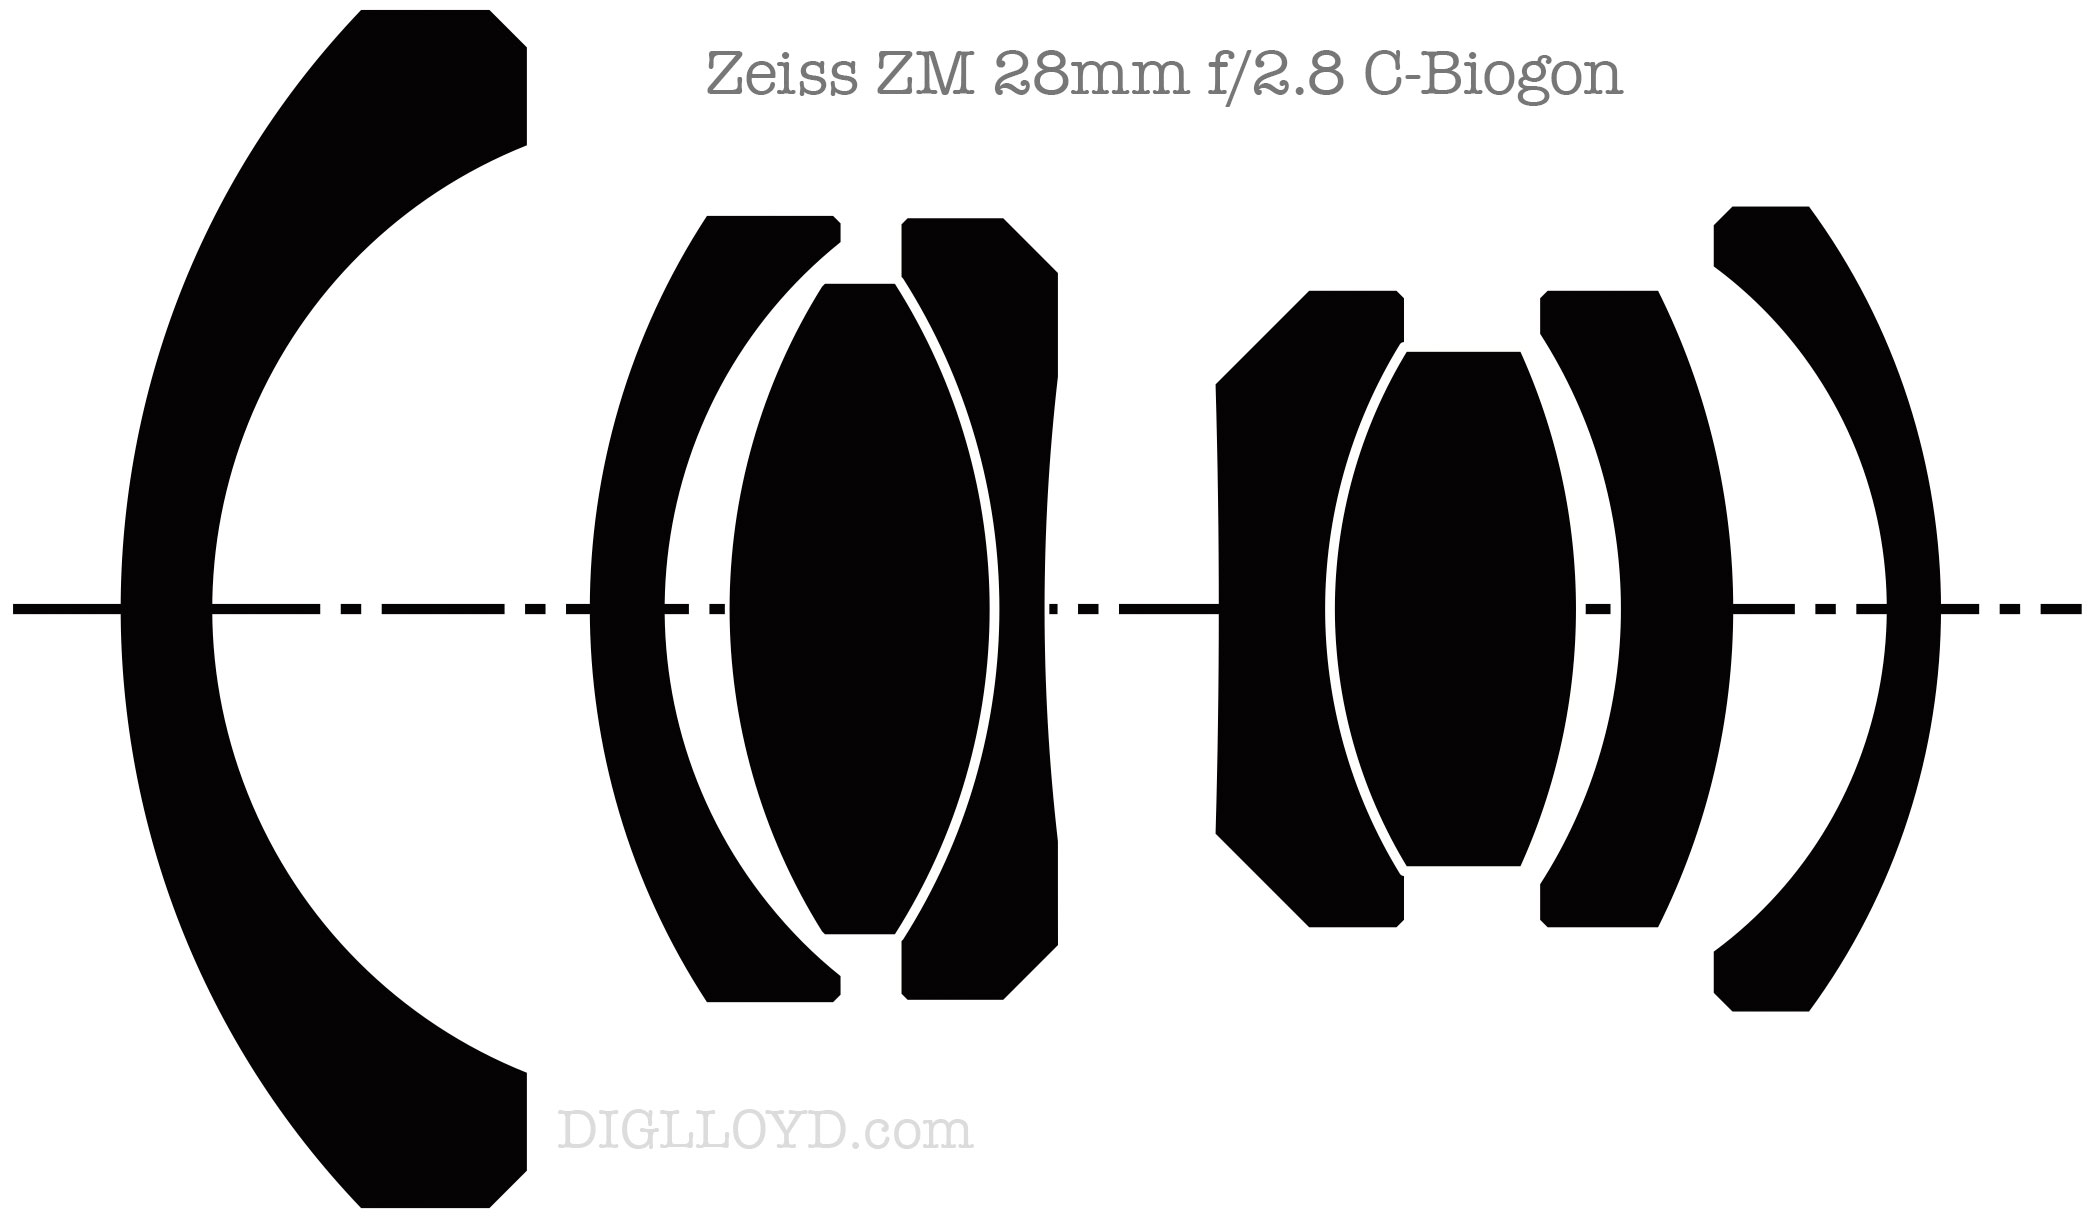 image of Zeiss ZM 28mm f/2.8 C-Biogon